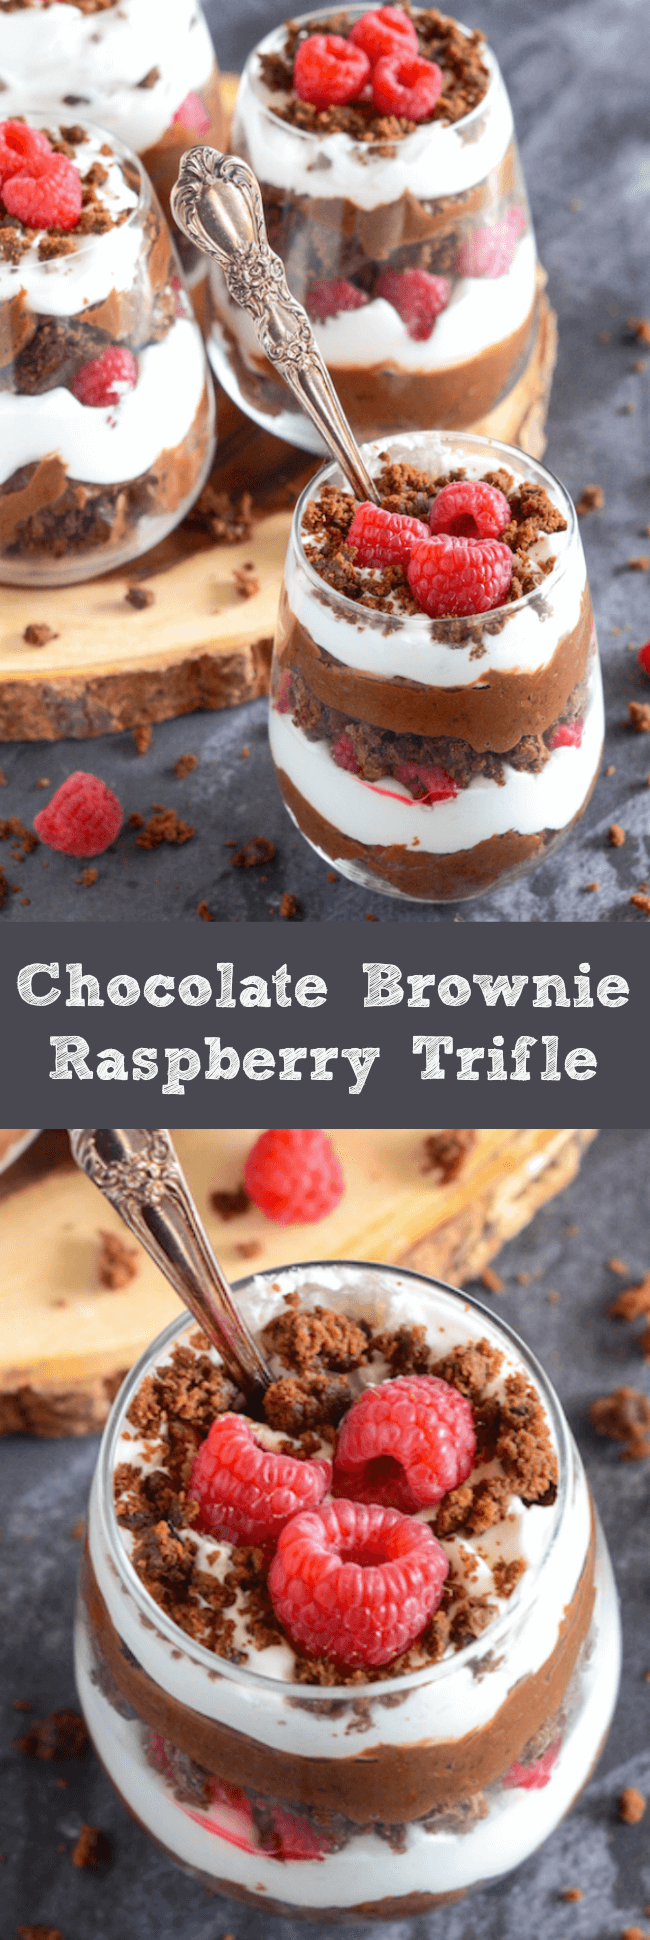 Chocolate Brownie Raspberry Trifle with brownies, chocolate pudding, raspberries and cream!